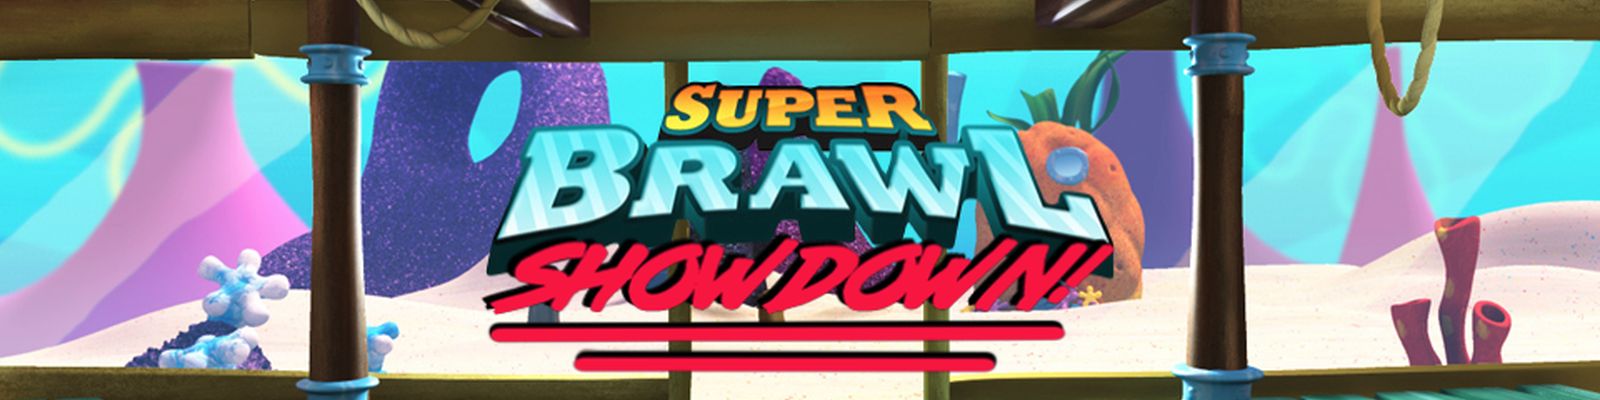 Super Brawl Showdown!